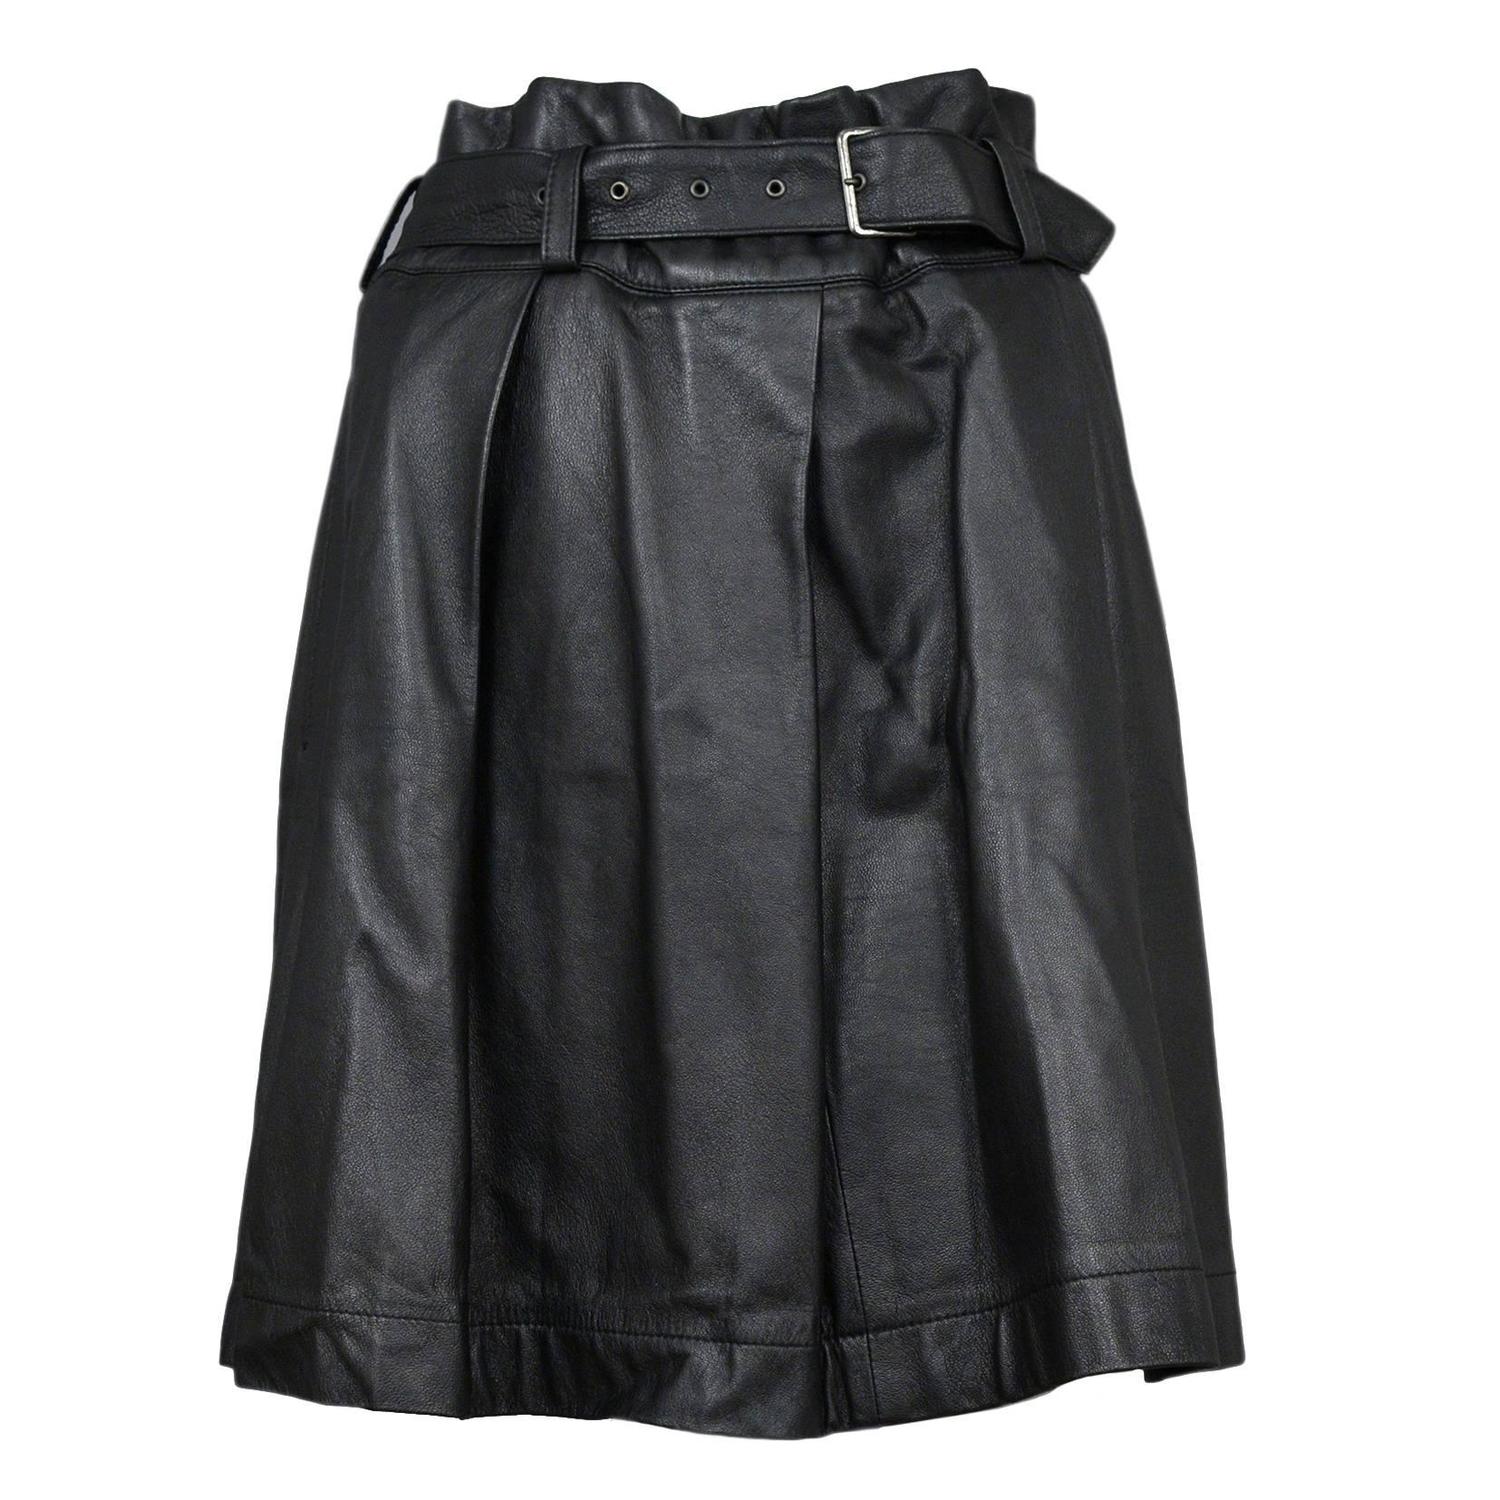 Belted Black Skirt 15